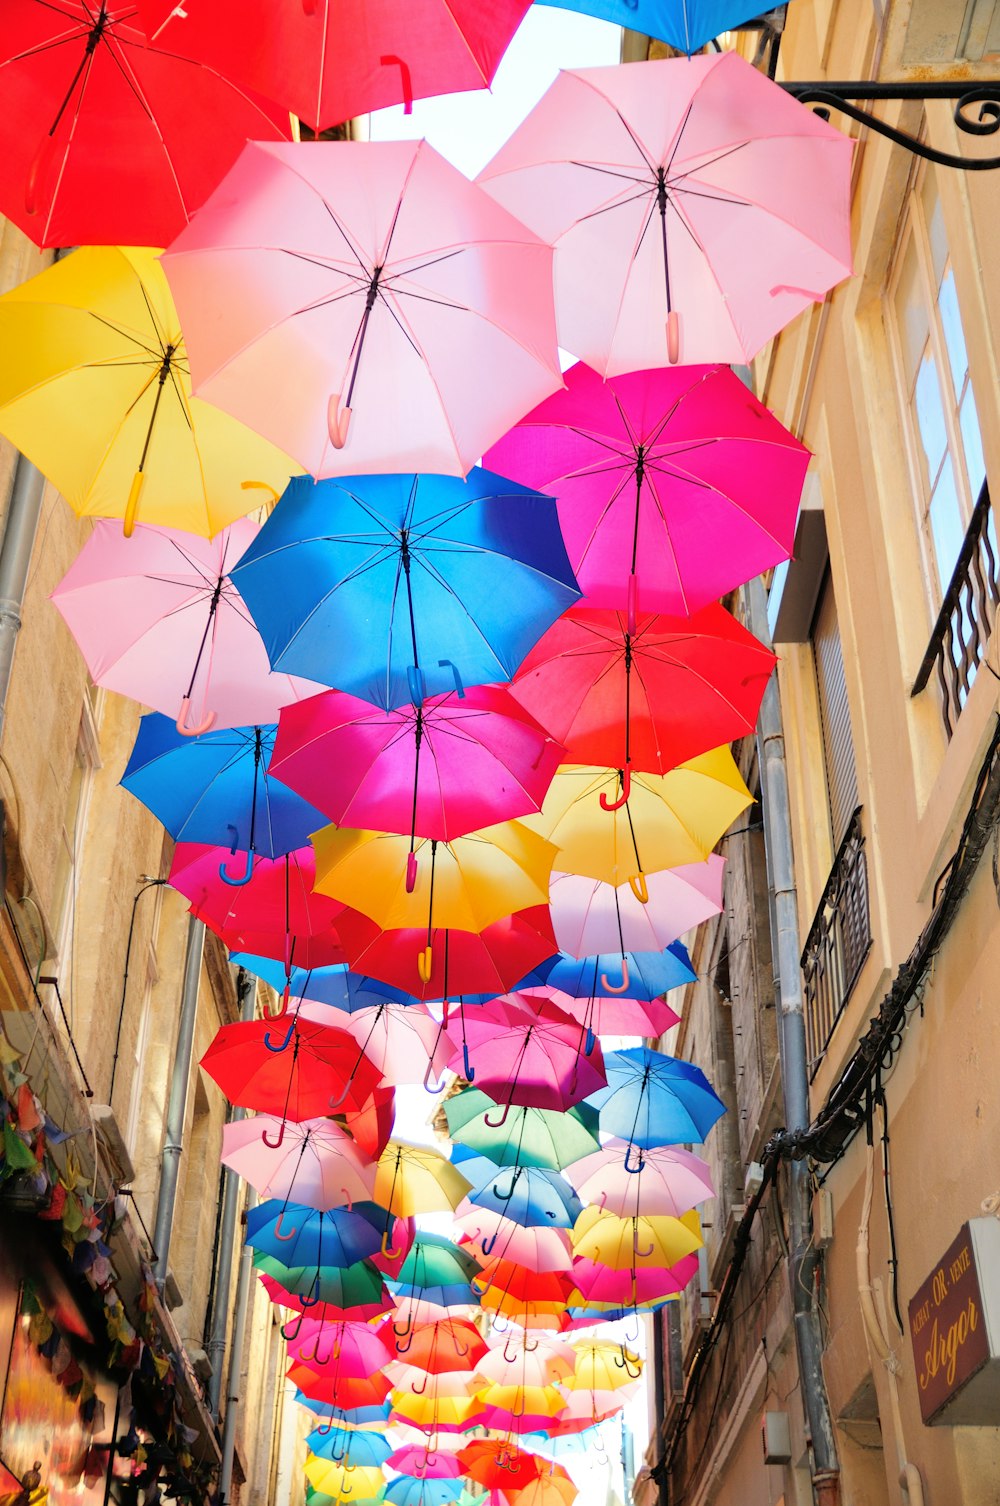 umbrella hanging beside buildings photo – Free Umbrella Image on Unsplash